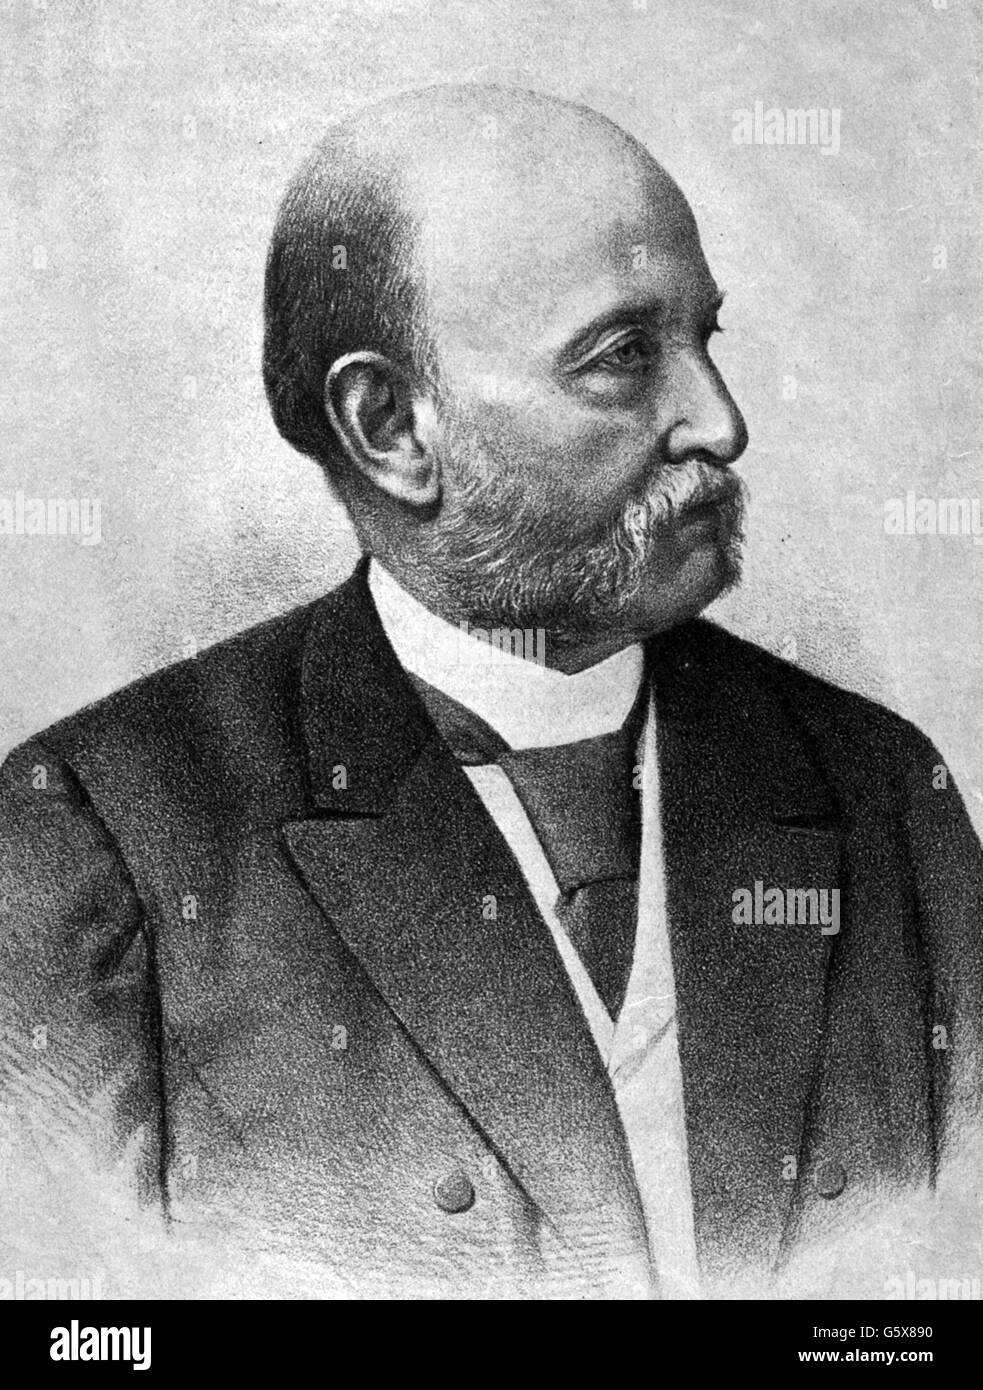 Mittnacht, Hermann von, 17.3.1825 - 2.5.1909, German politician, Prime Minister of the Kingdom of Wuerttemberg 1876 - 1900, portrait, 'Die Woche', number 12, 1901, Stock Photo